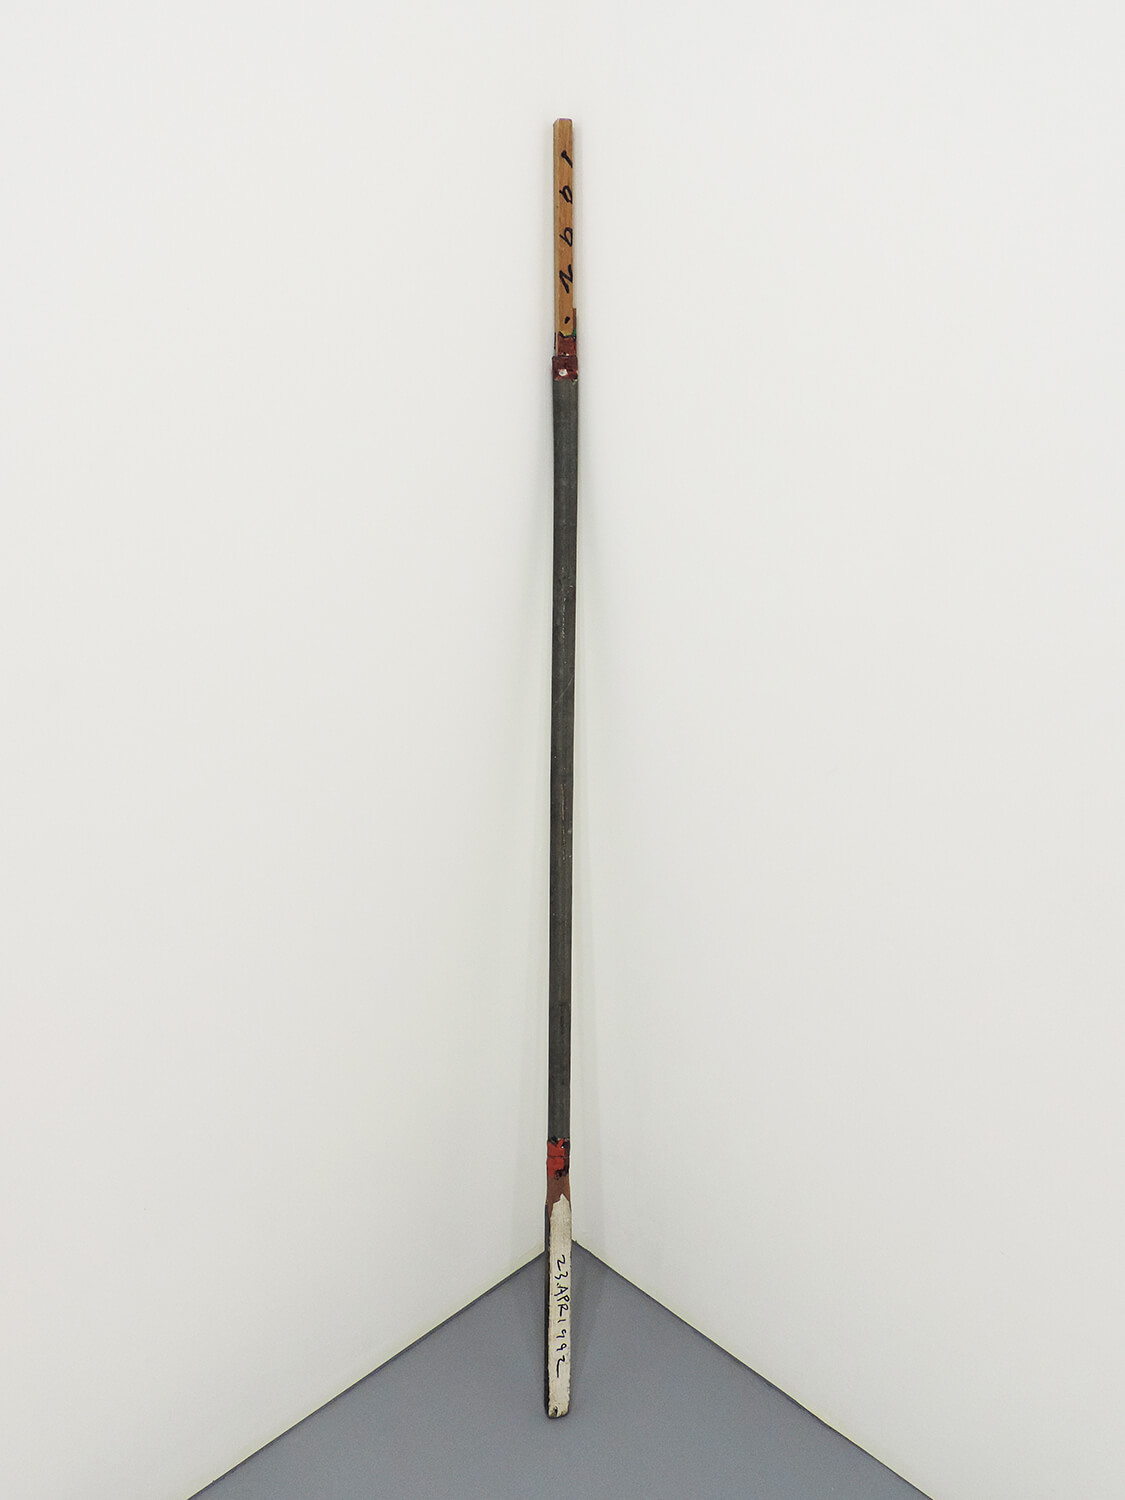 <b>Untitled</b><br>Acrylic, iron, wood　141.5 x 2.7 x 2.6 cm　1992